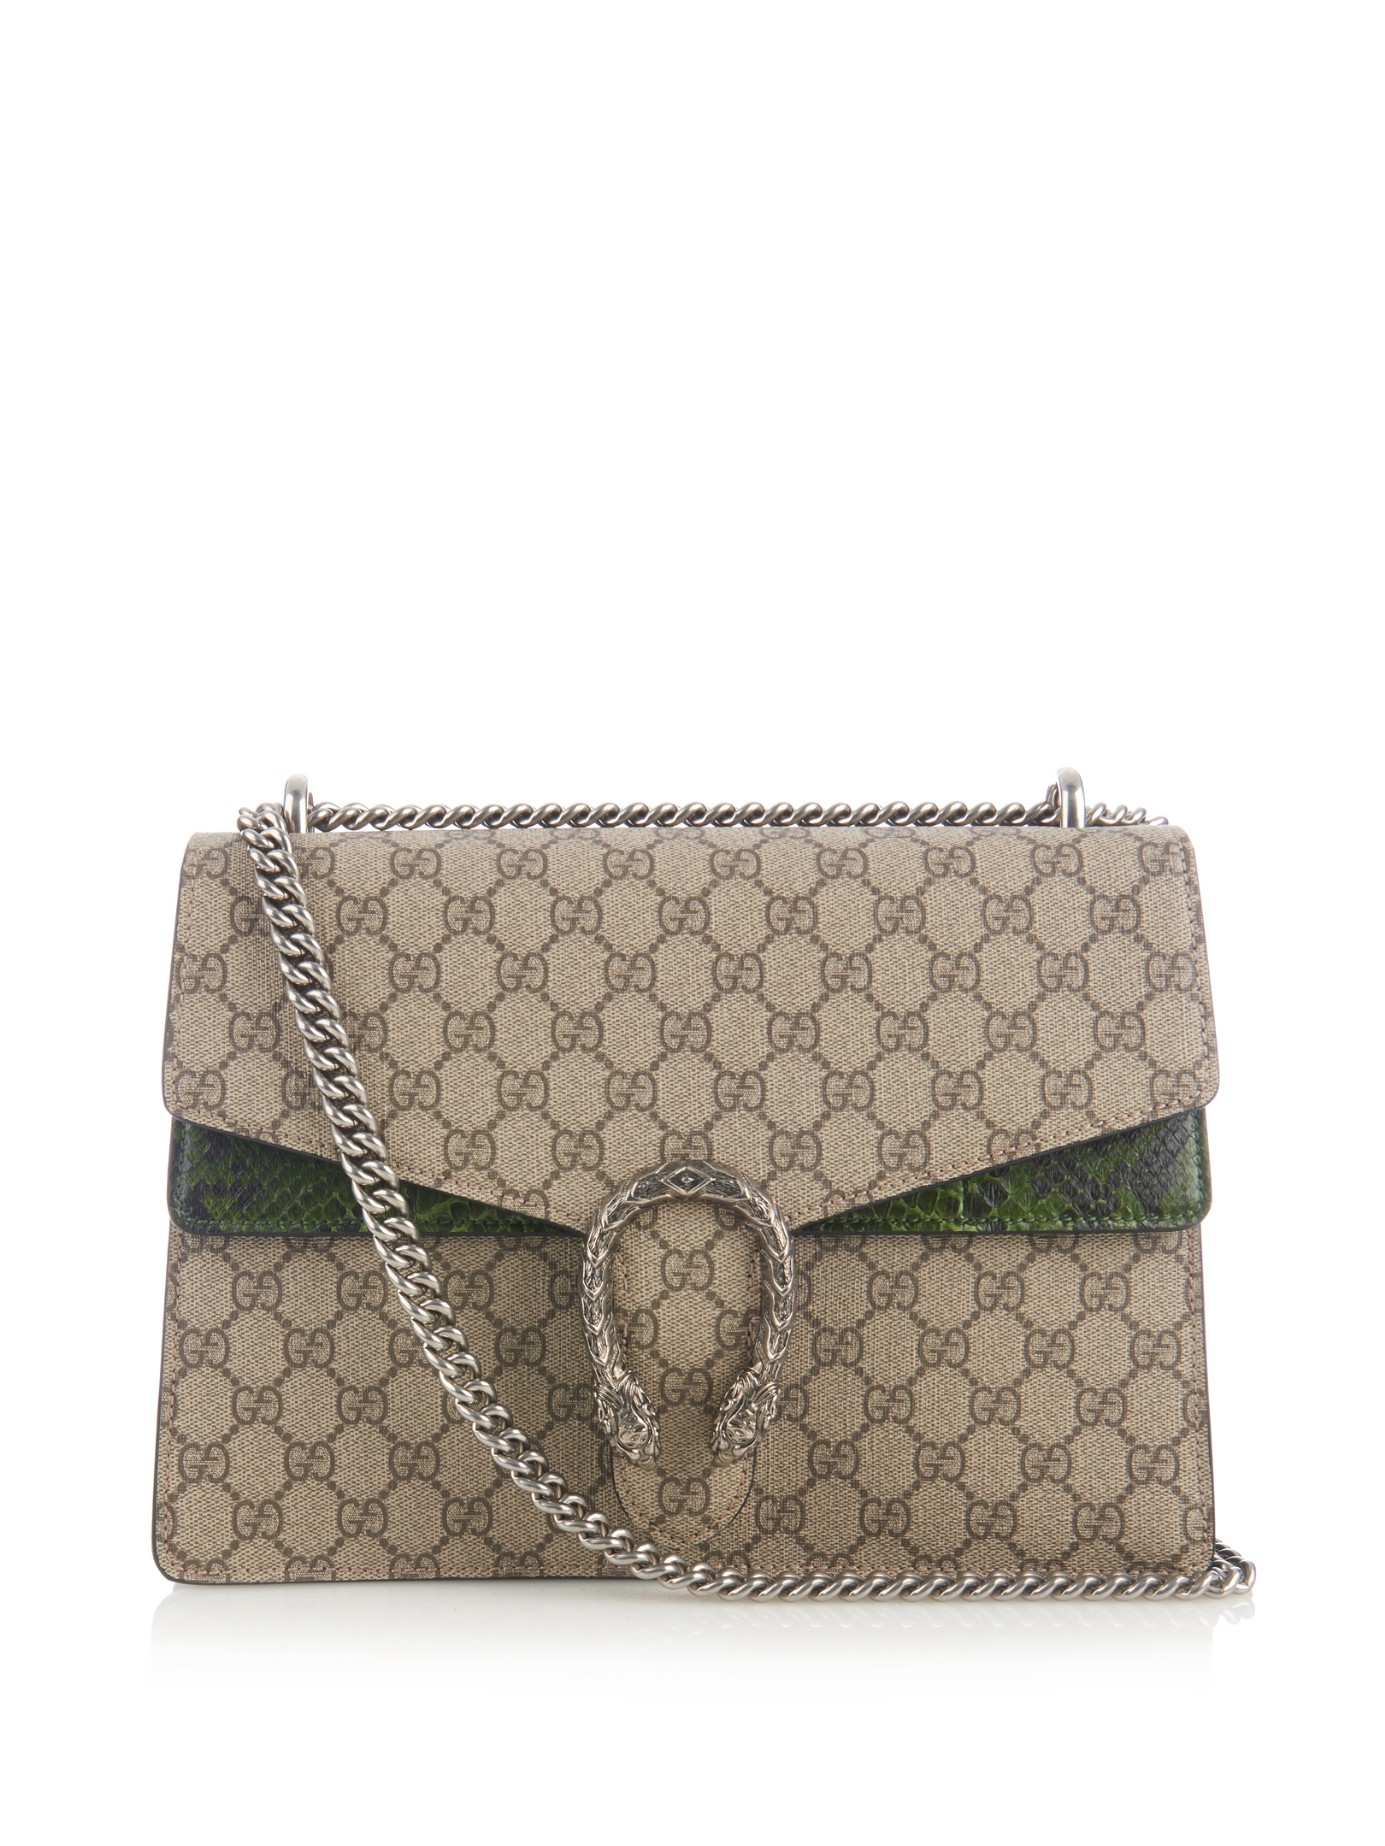 Gucci Dionysus Gg Supreme Canvas Shoulder Bag in Green - Lyst